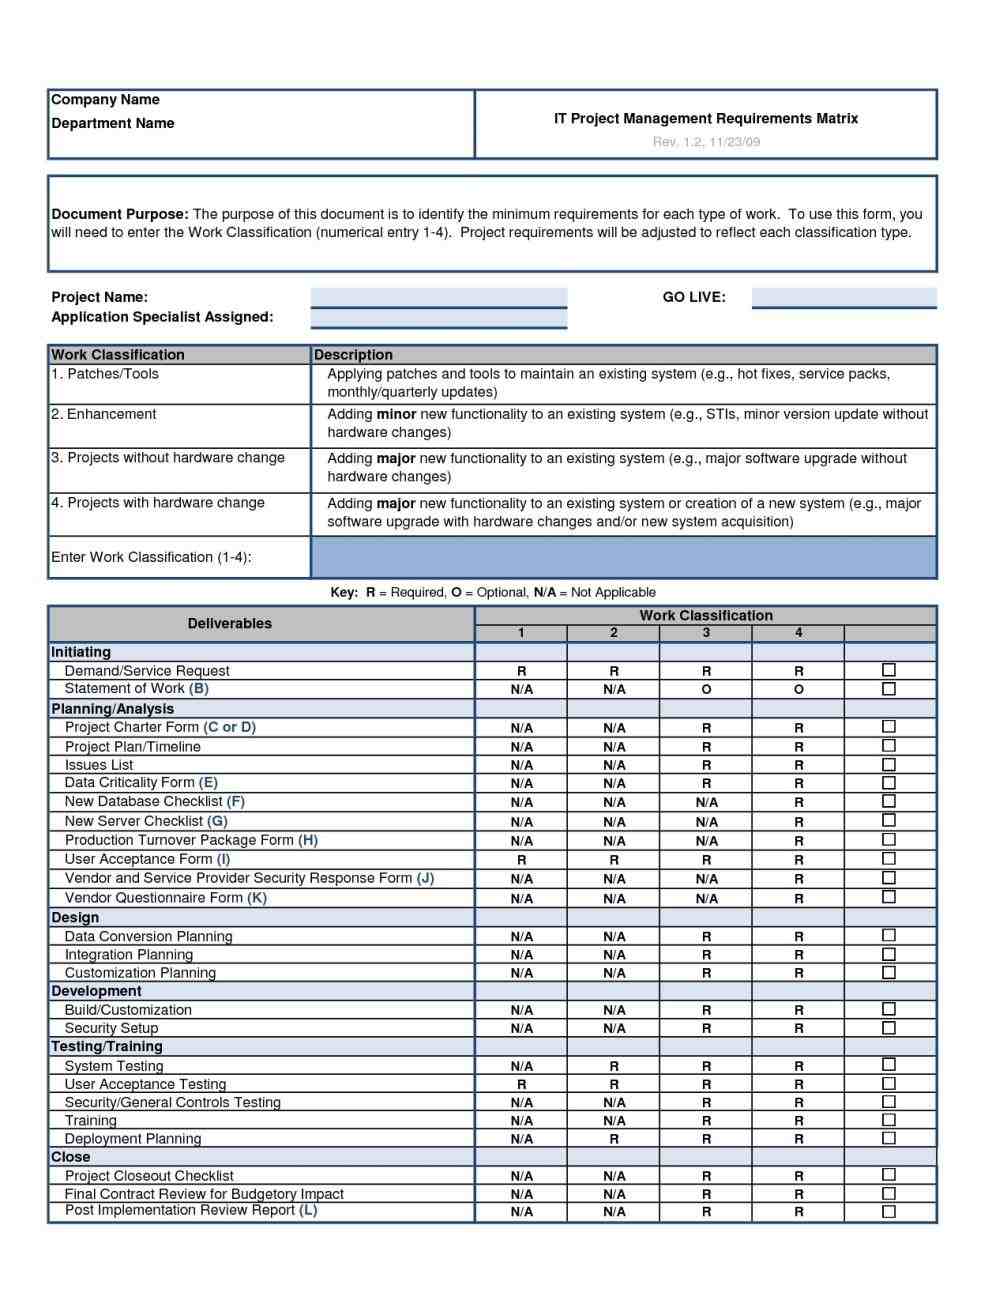 Requirements traceability matrix template pdf